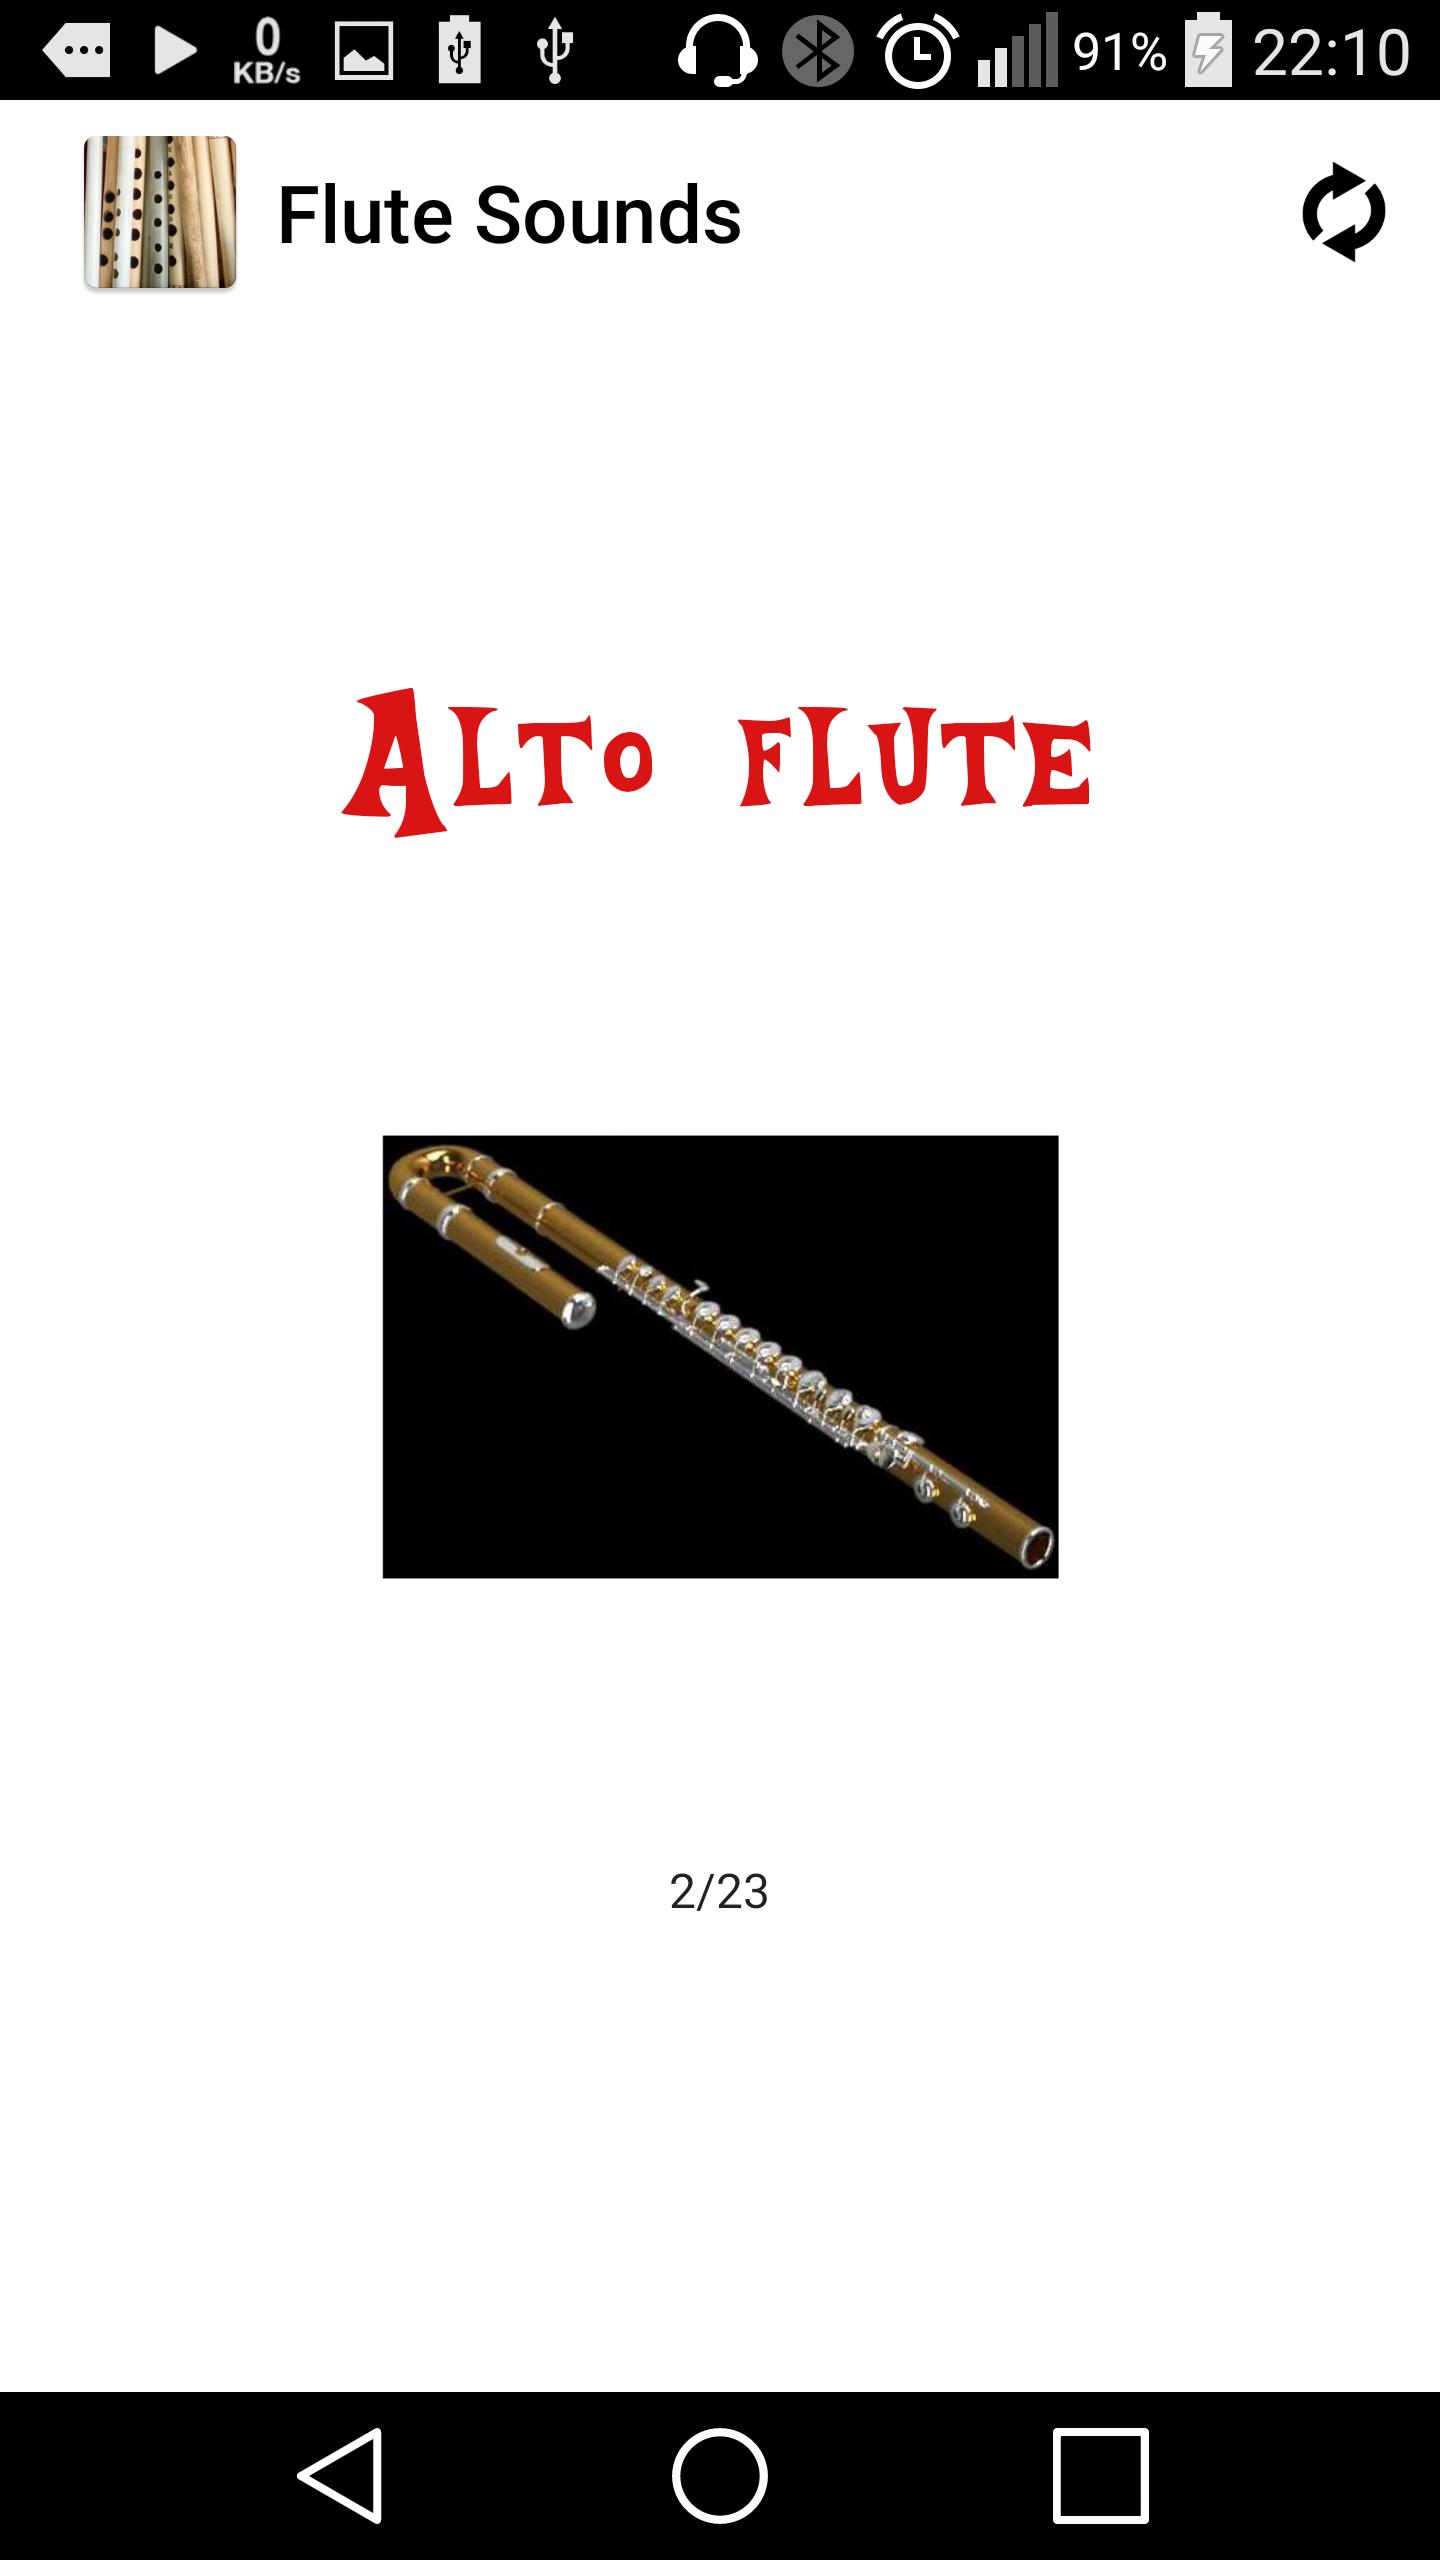 Flute sound